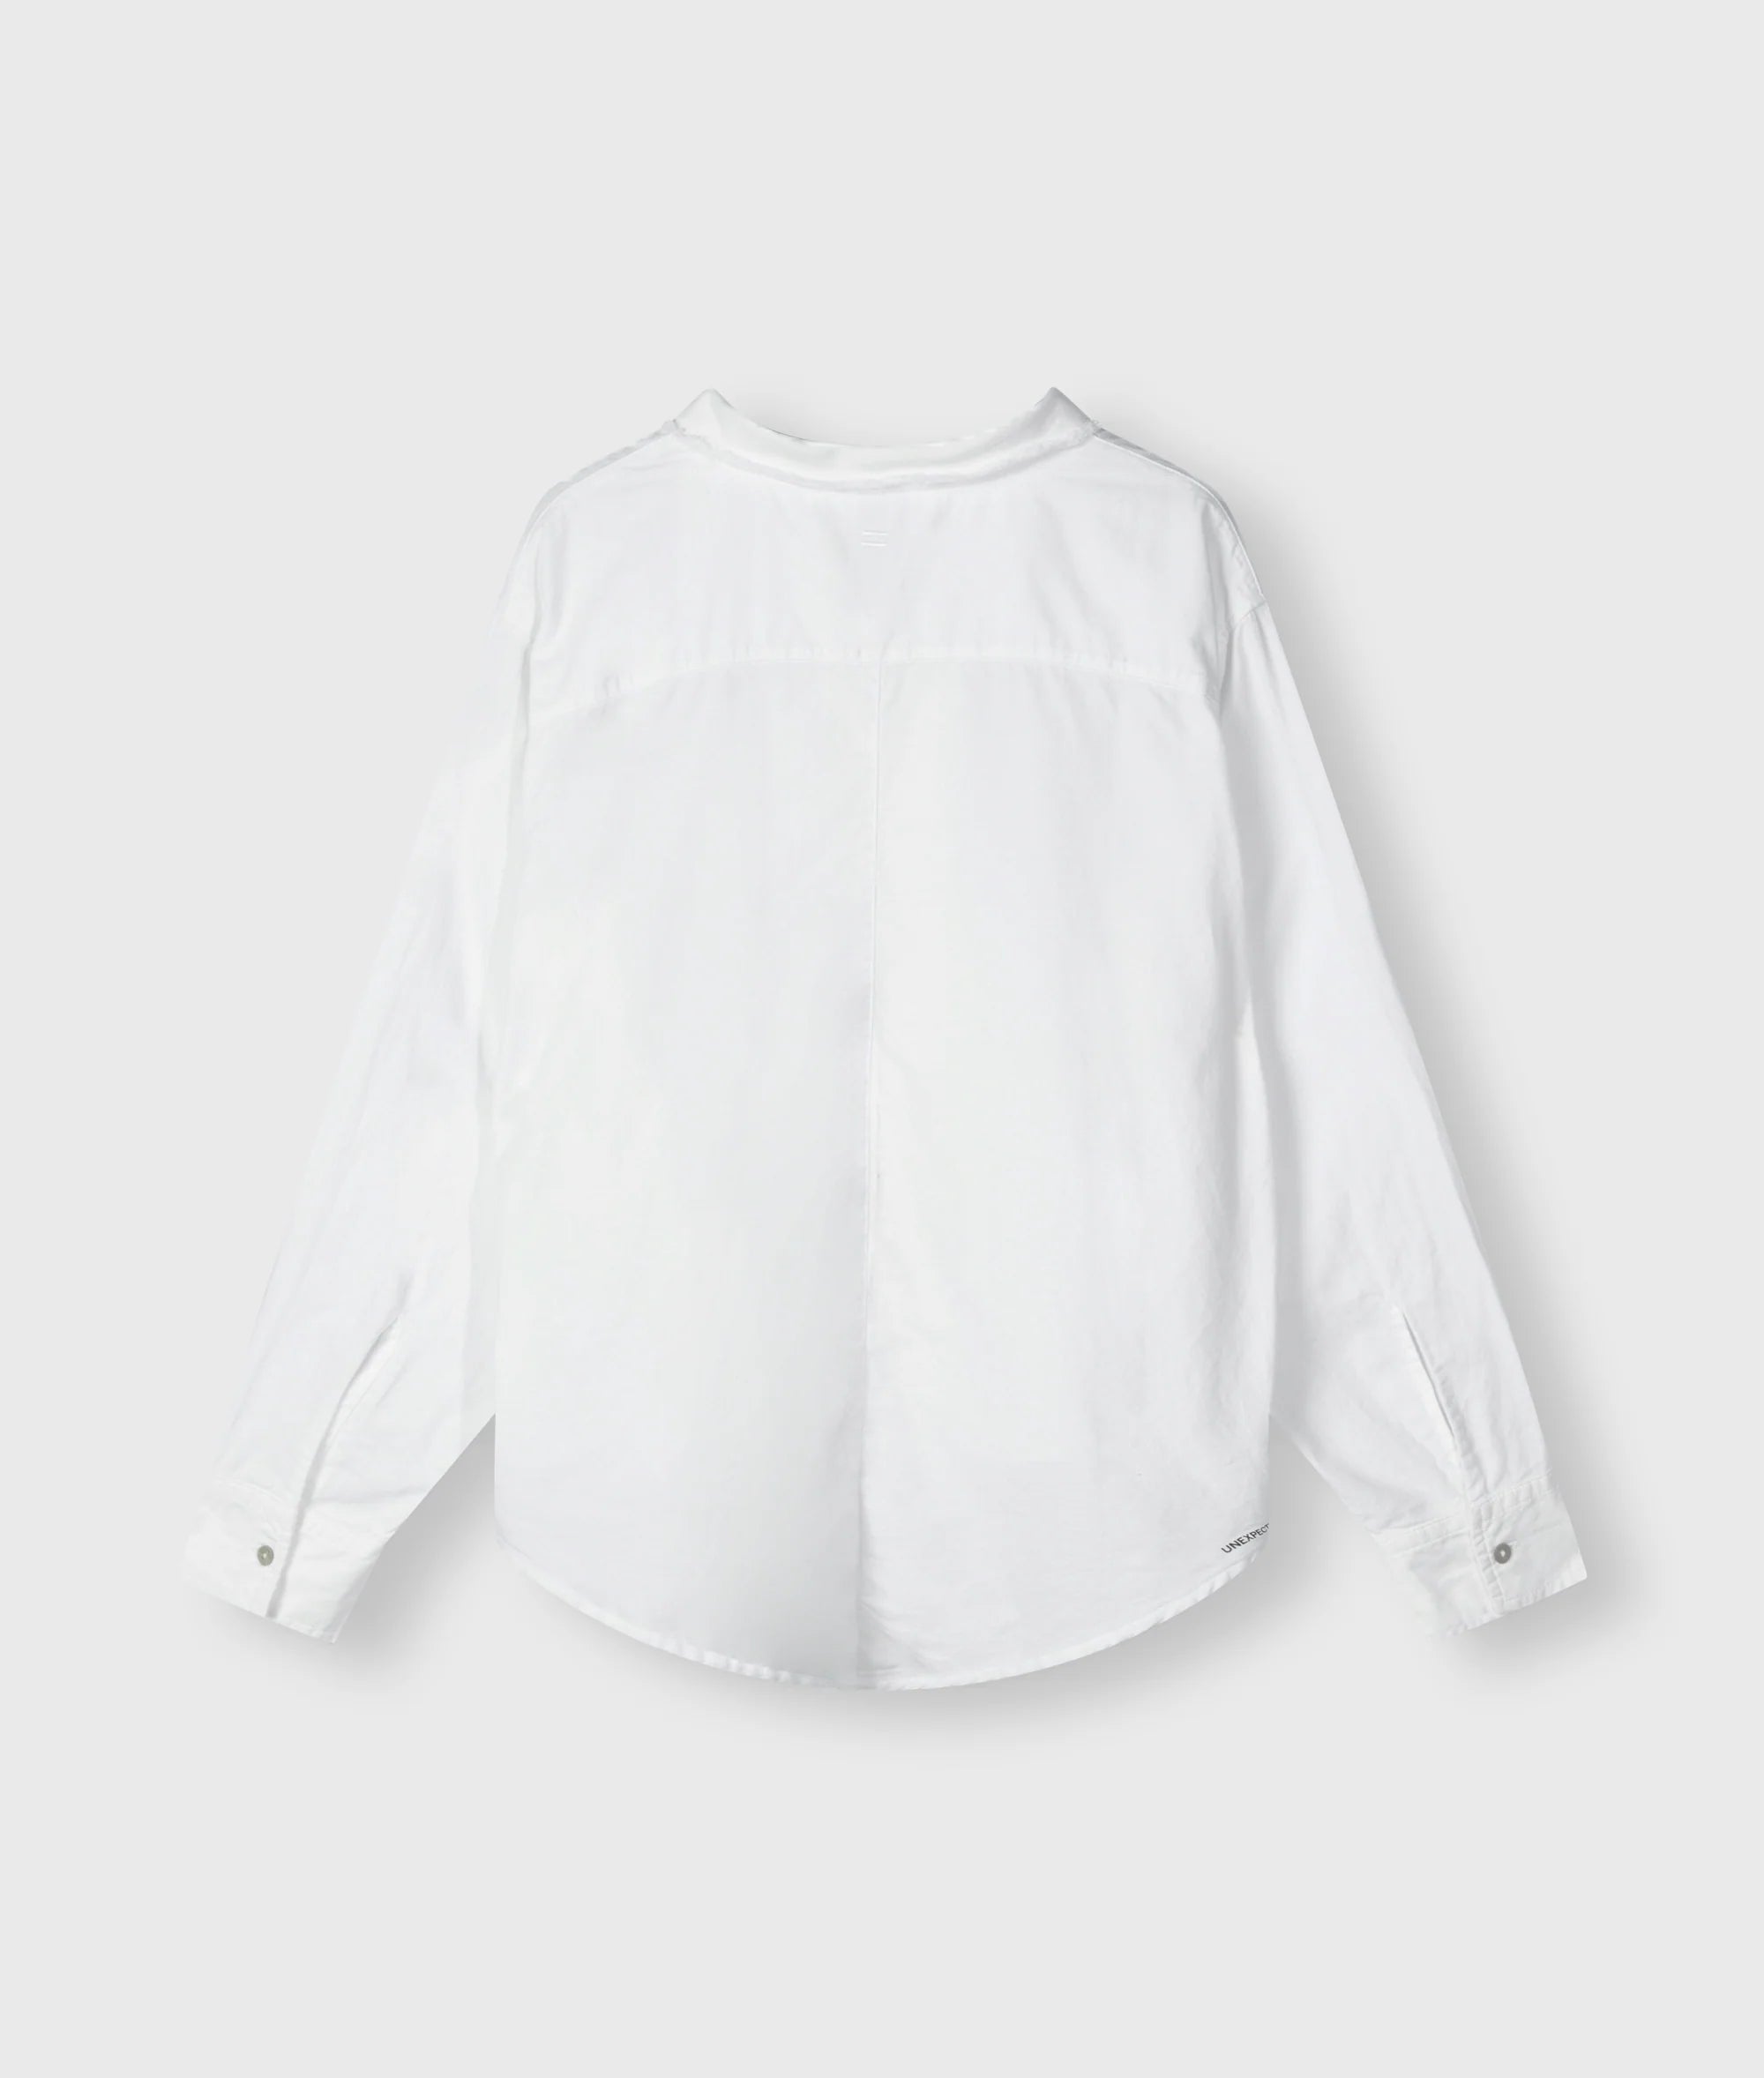 The pique shirt white - 10 days